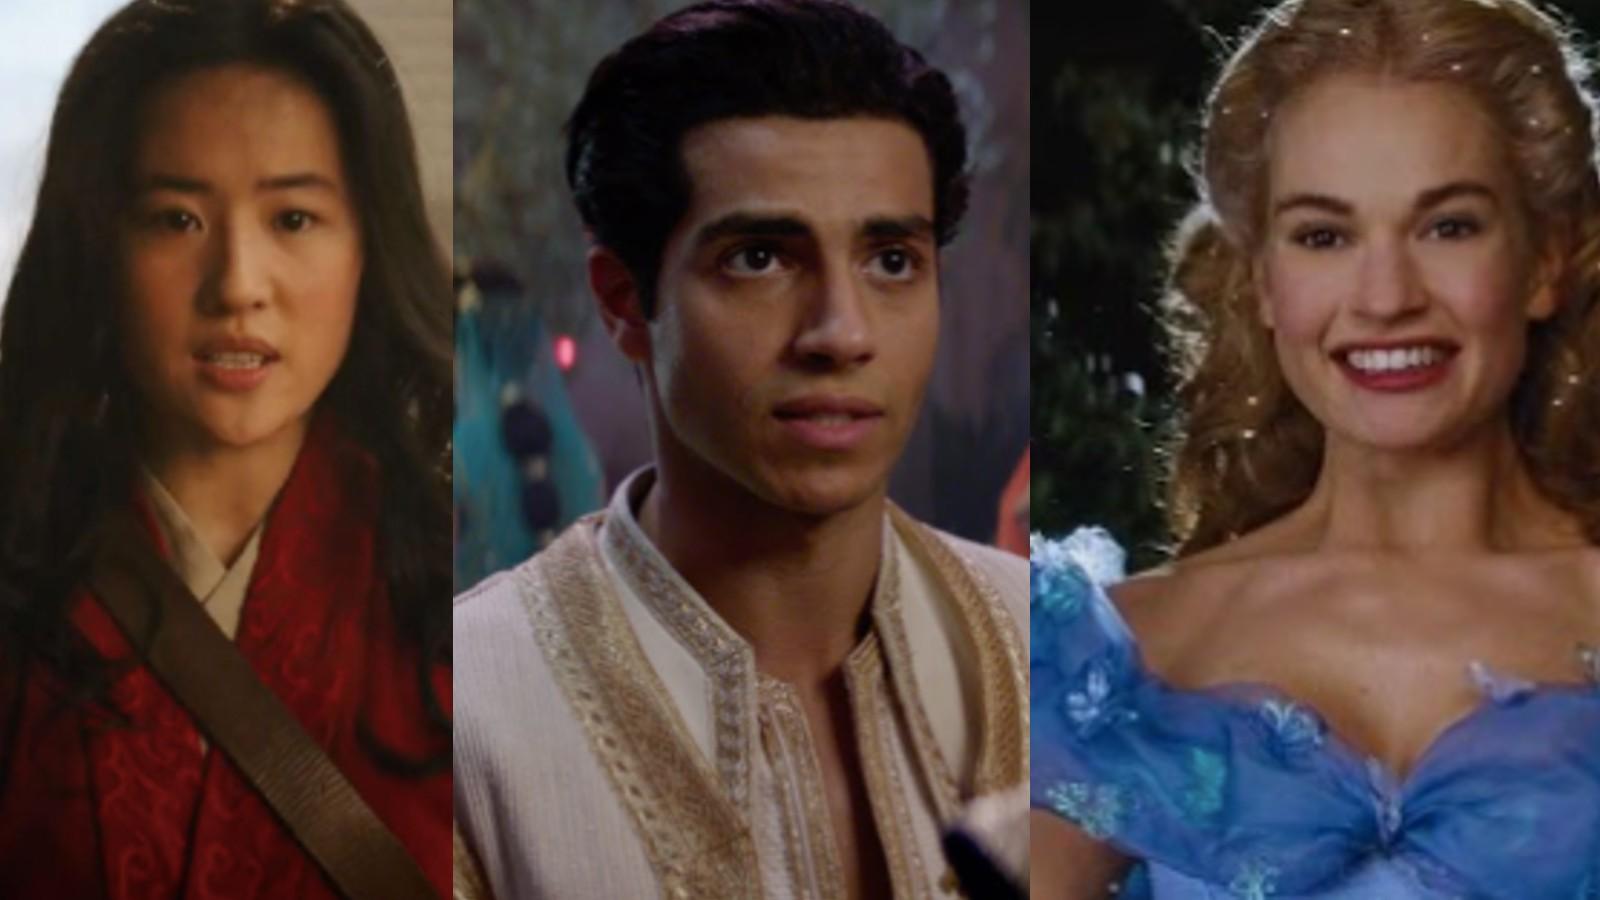 A mash up of the live-action Mulan, Aladdin, and Cinderella movies